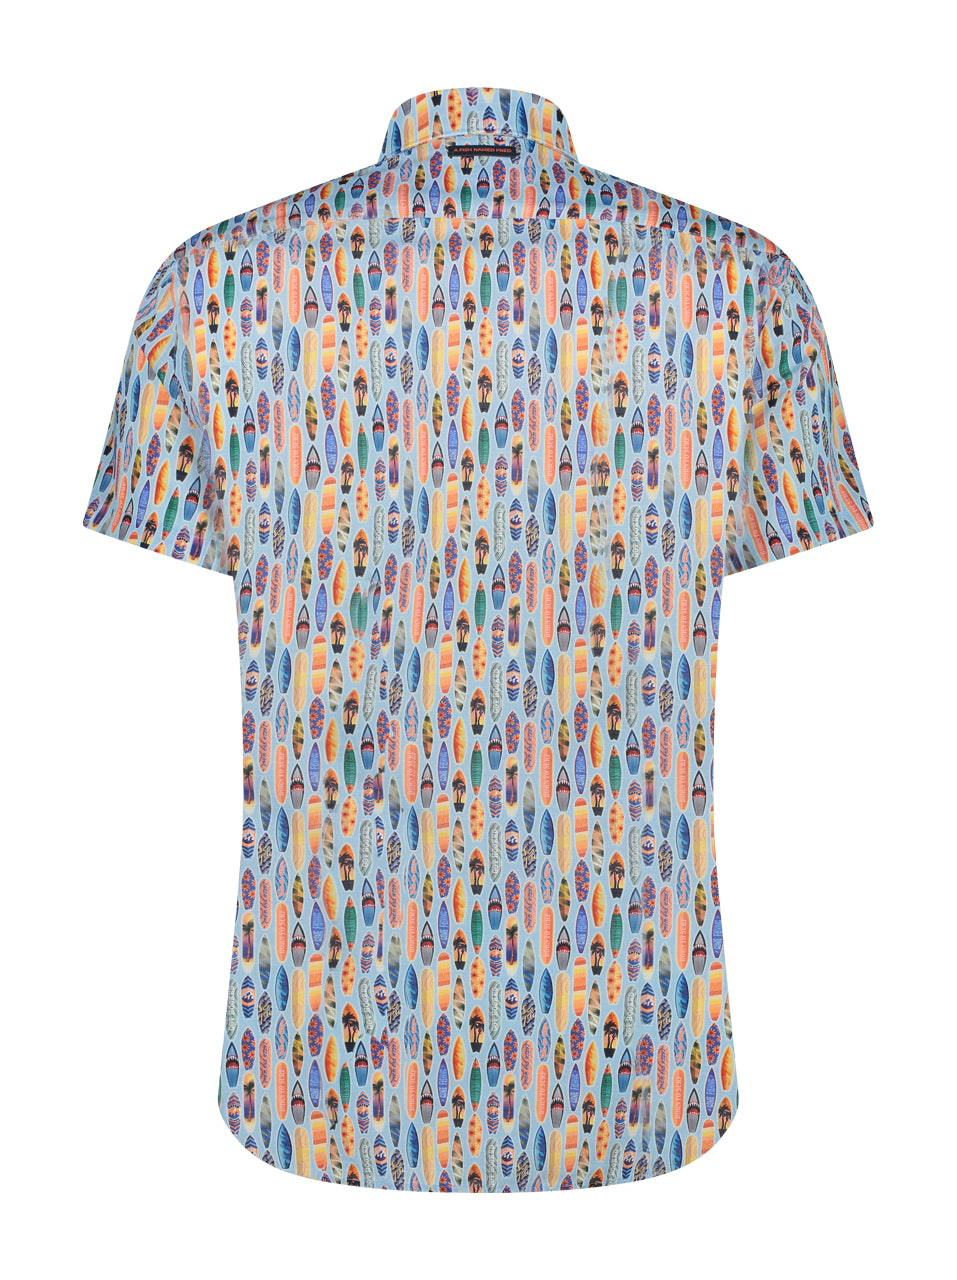 A FISH NAMED FRED Short Sleeve Print Shirt 28057